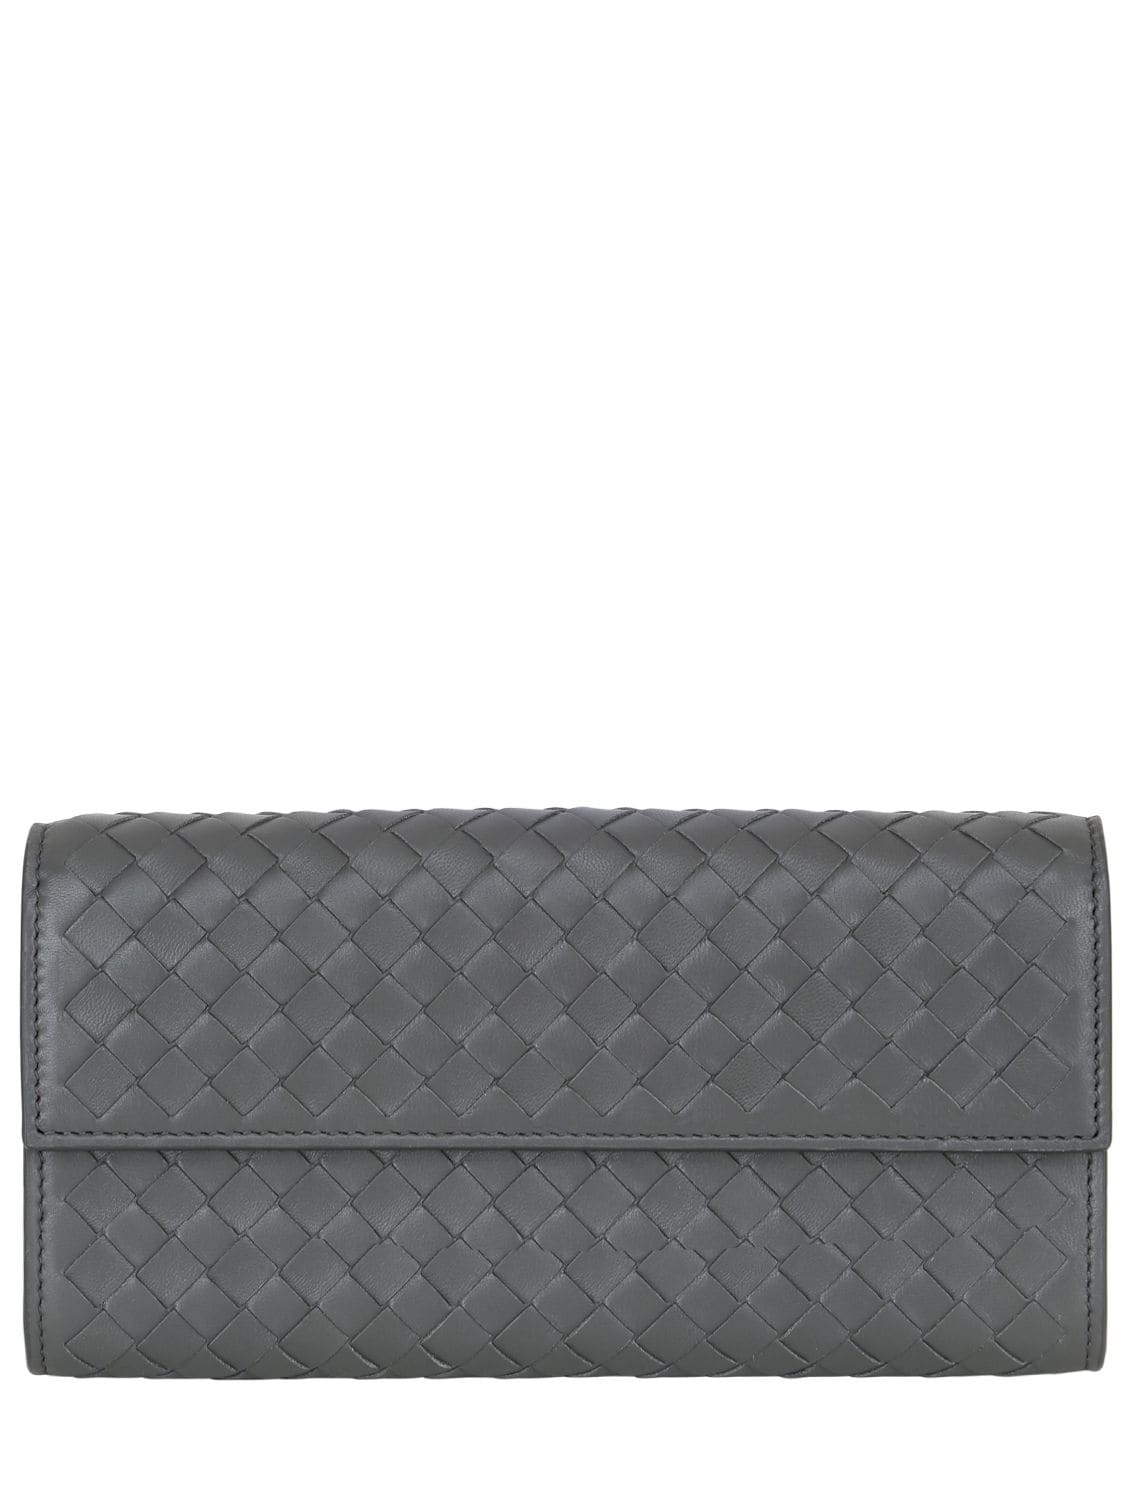 Bottega Veneta Intrecciato Leather Flap Wallet In Grey